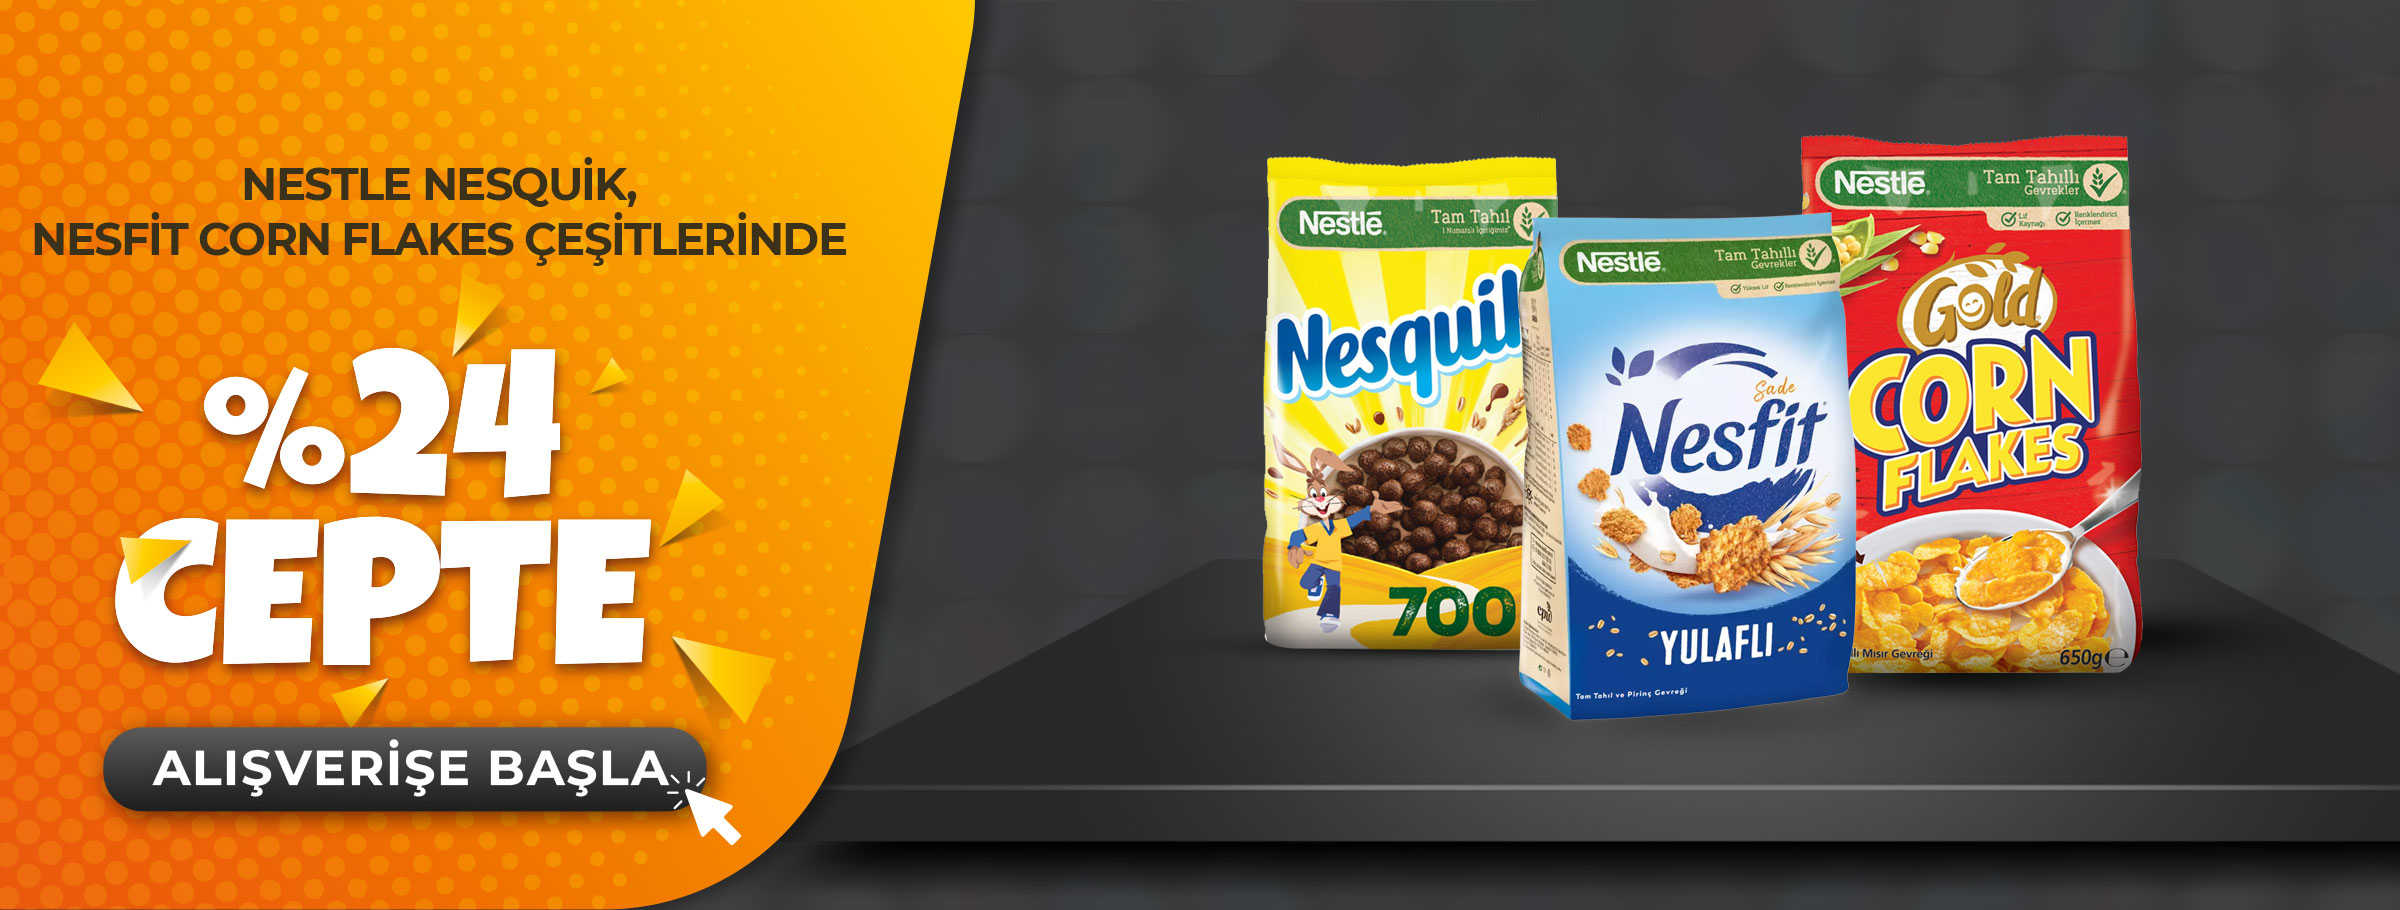 Nestle Nesquik, Nesfit Corn Flakes Çeşitlerinde %24 Cepte!